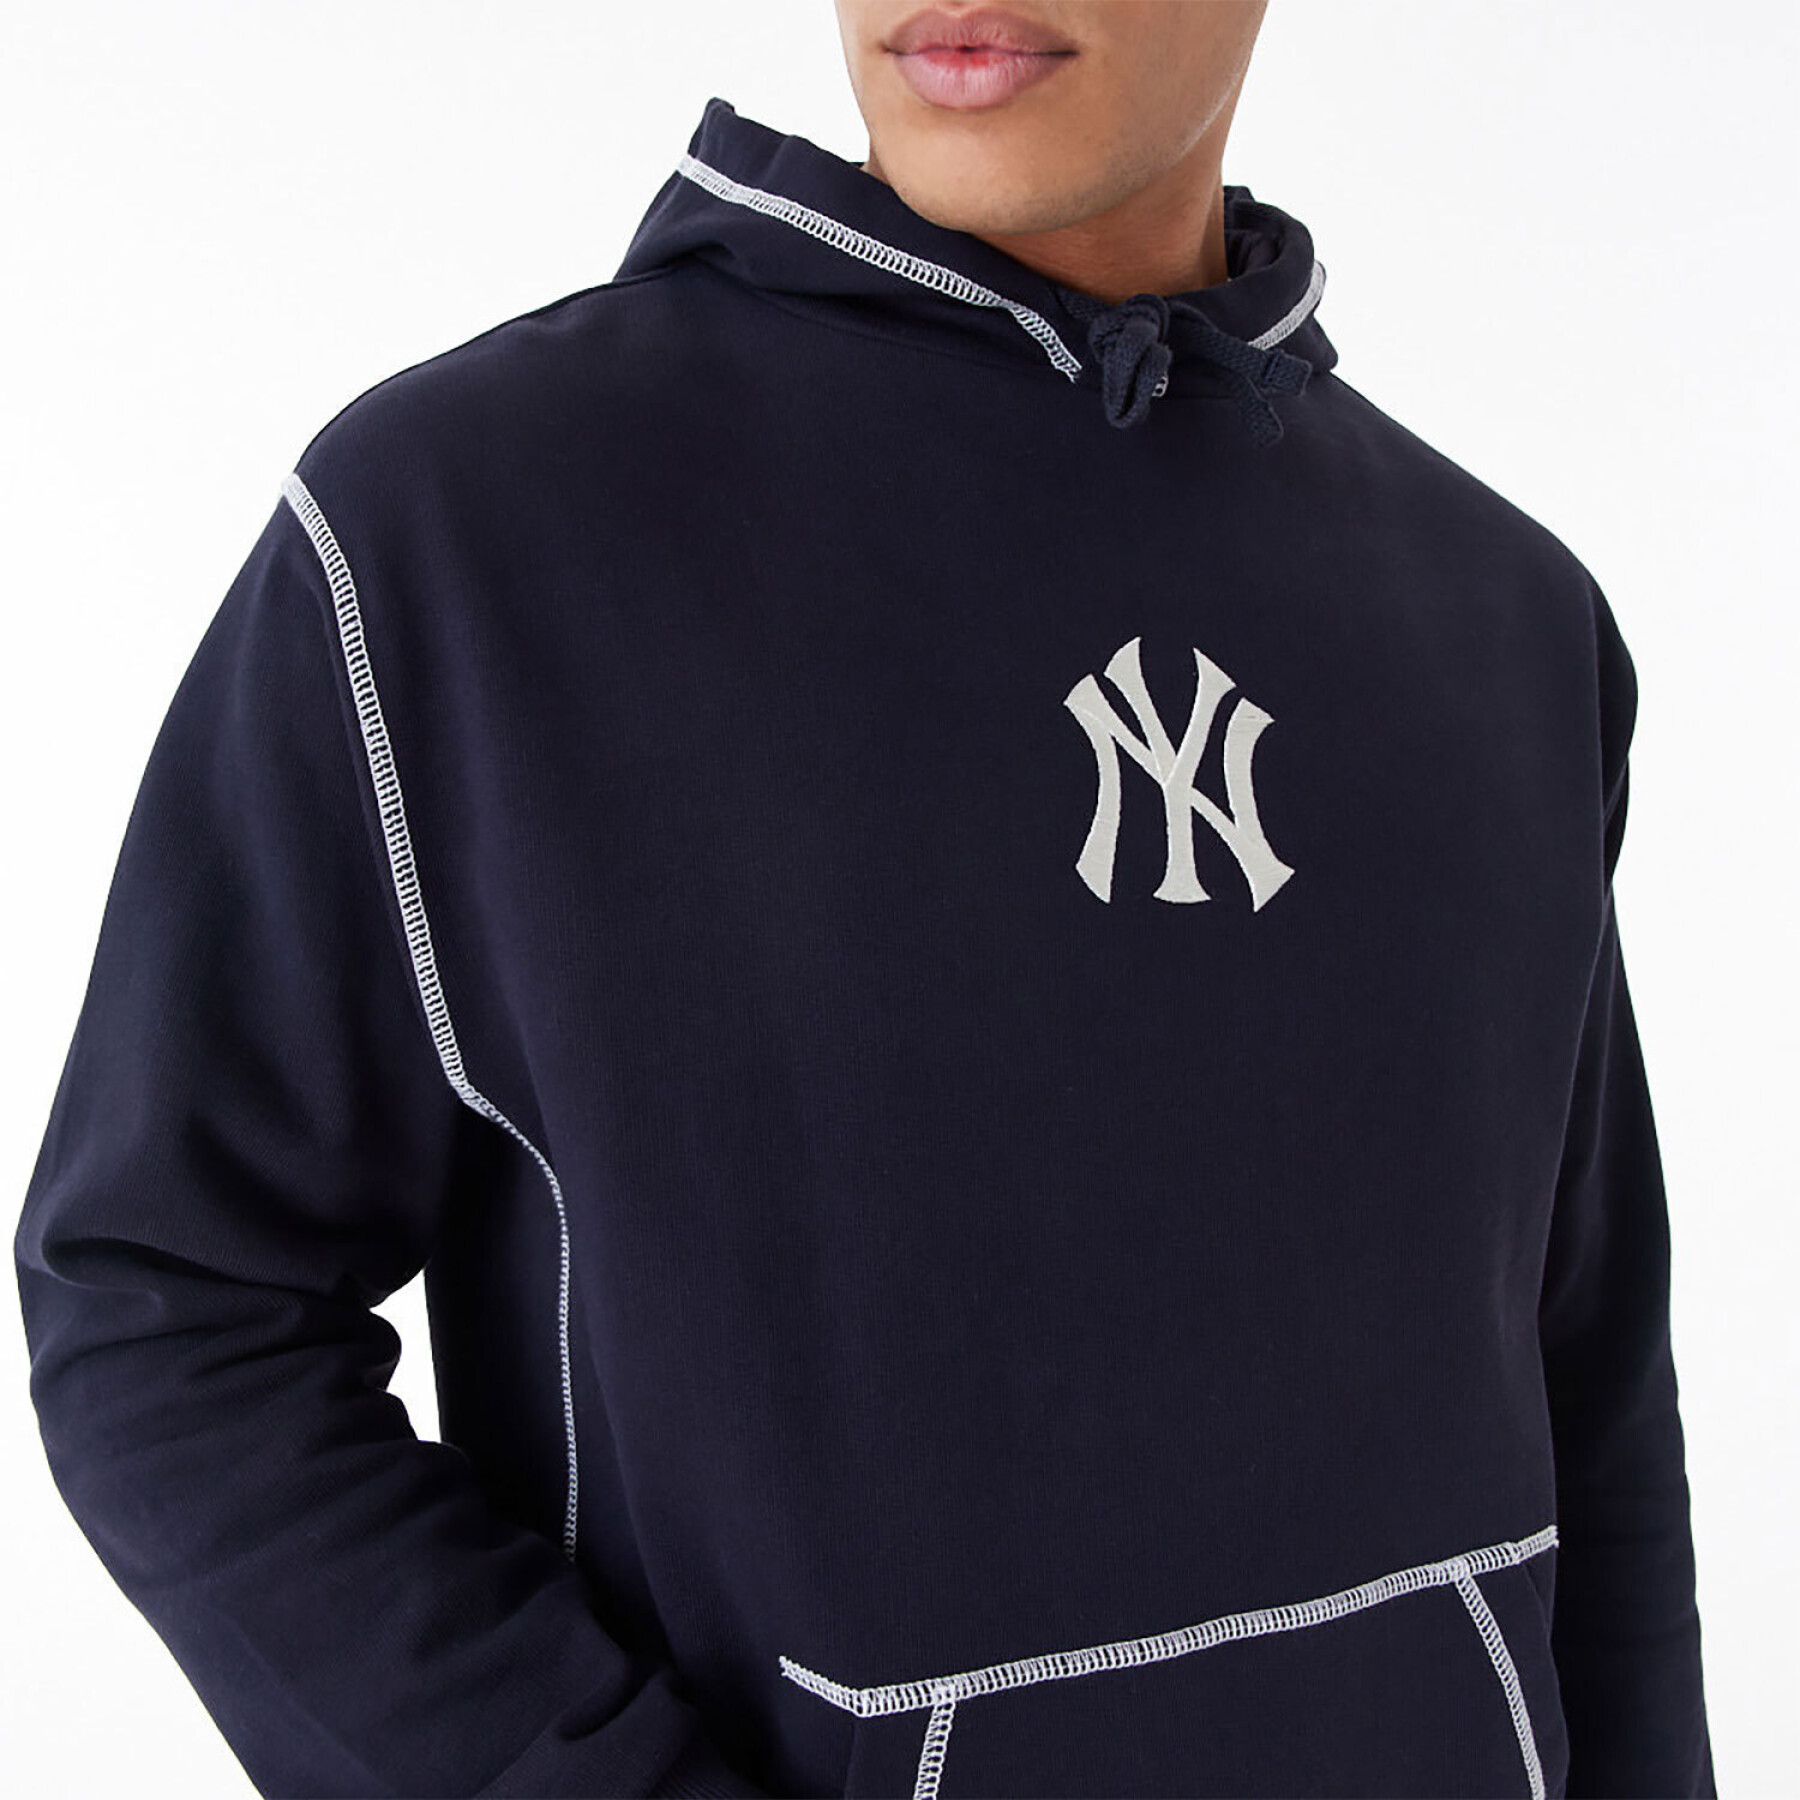 Hooded sweatshirt New York Yankees MLB World Series